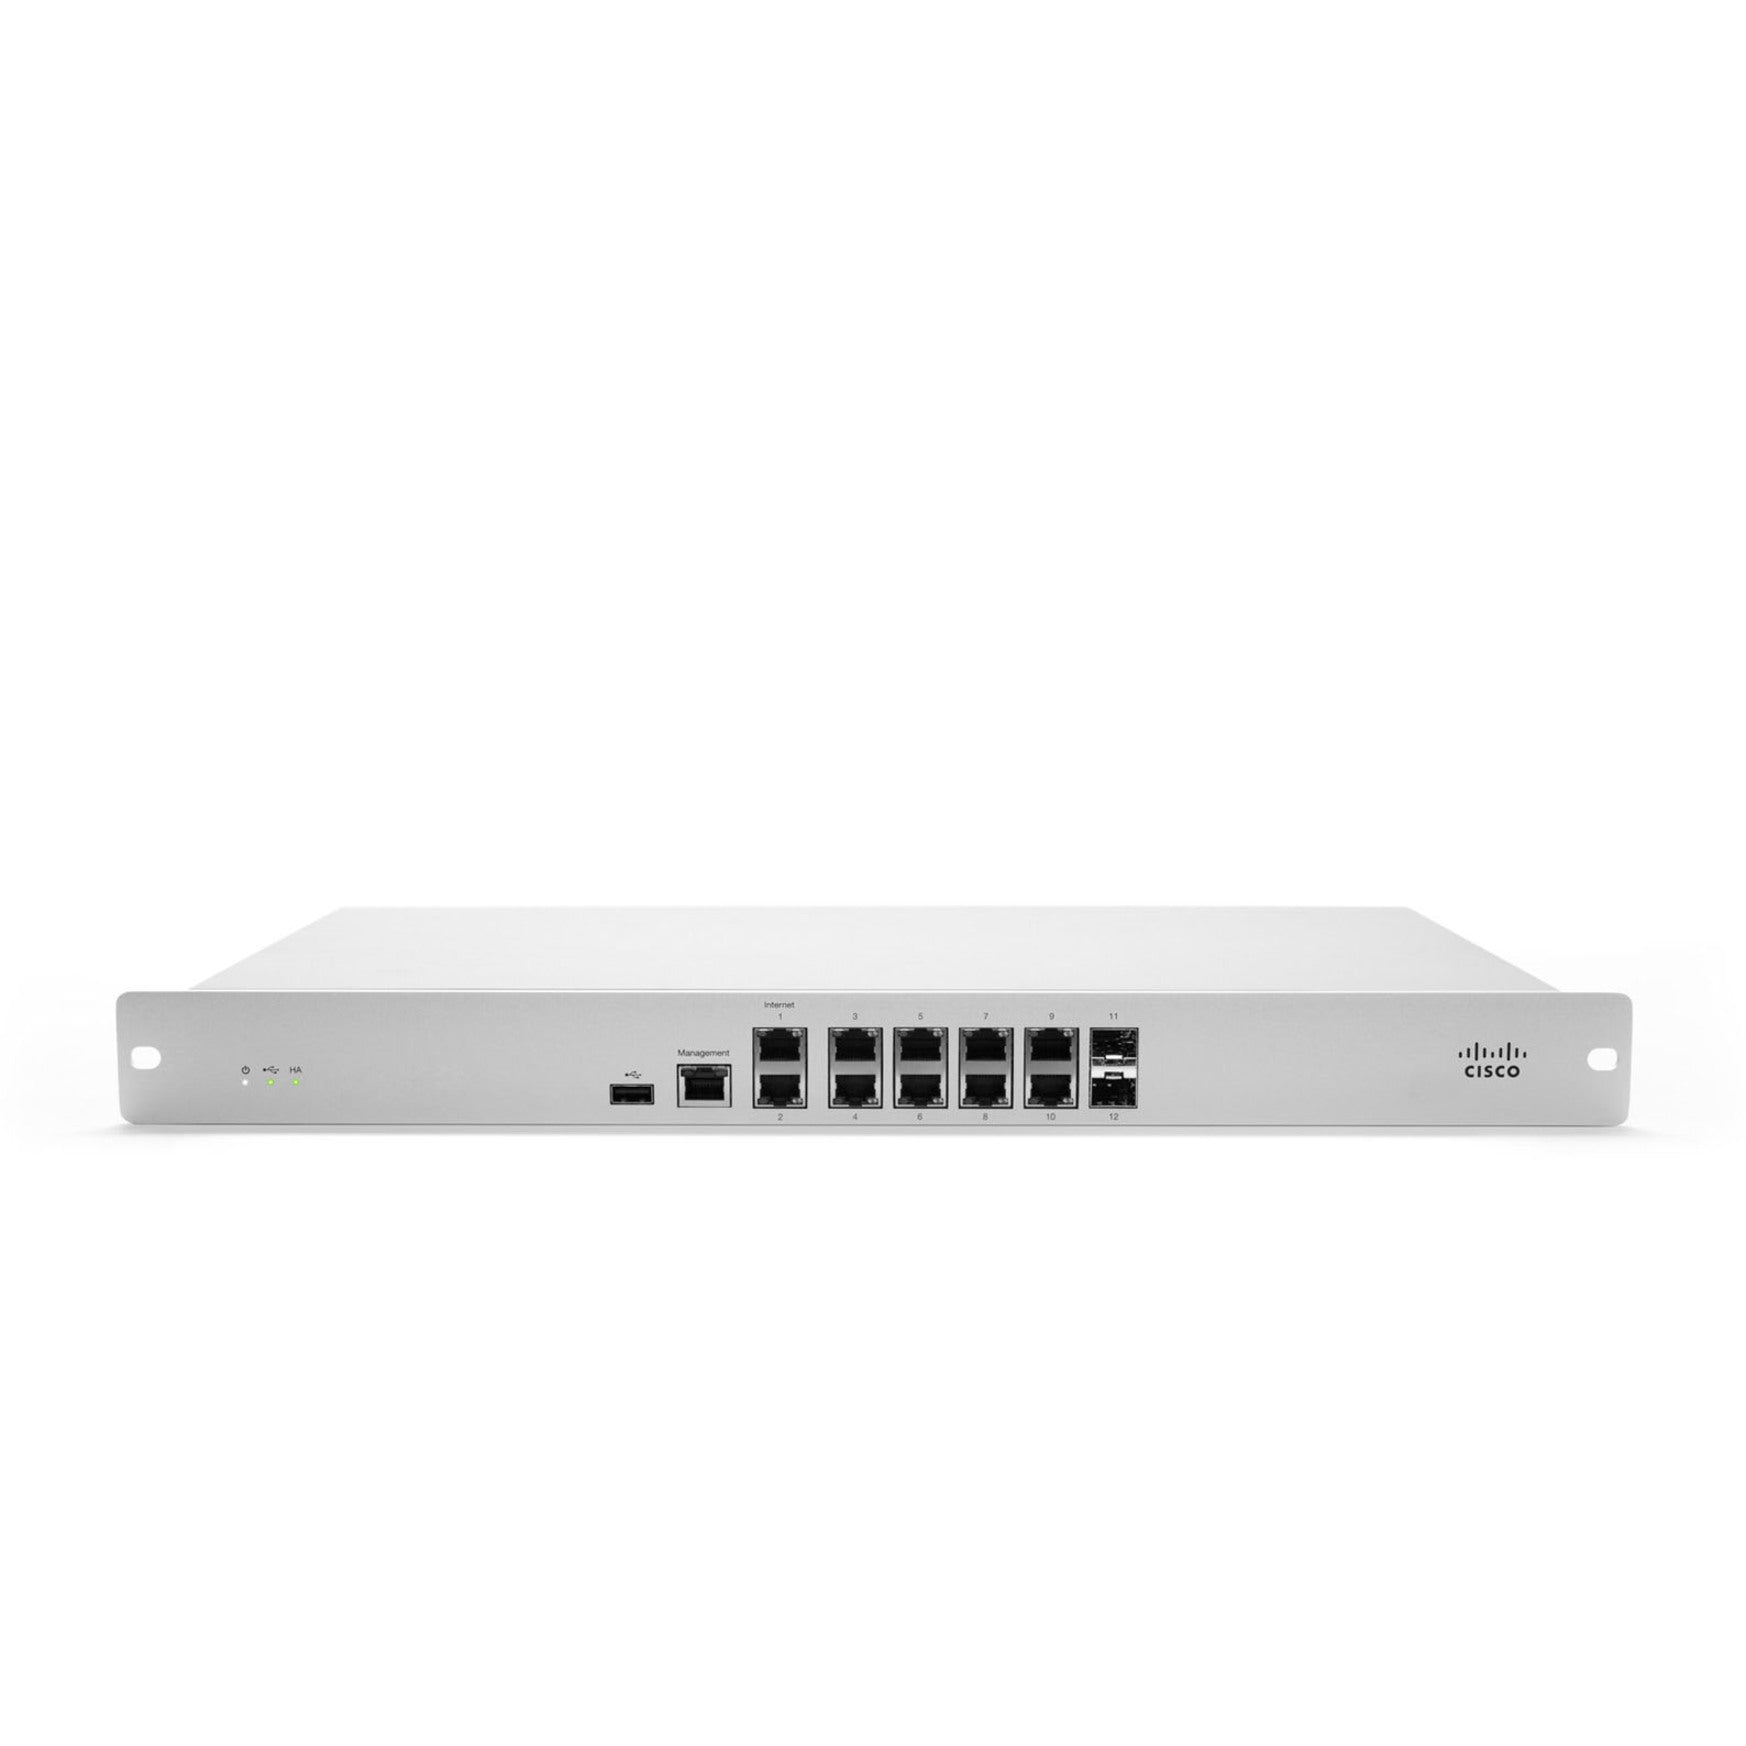 Meraki MX84 Cloud Managed Security Appliance (MX84-HW)